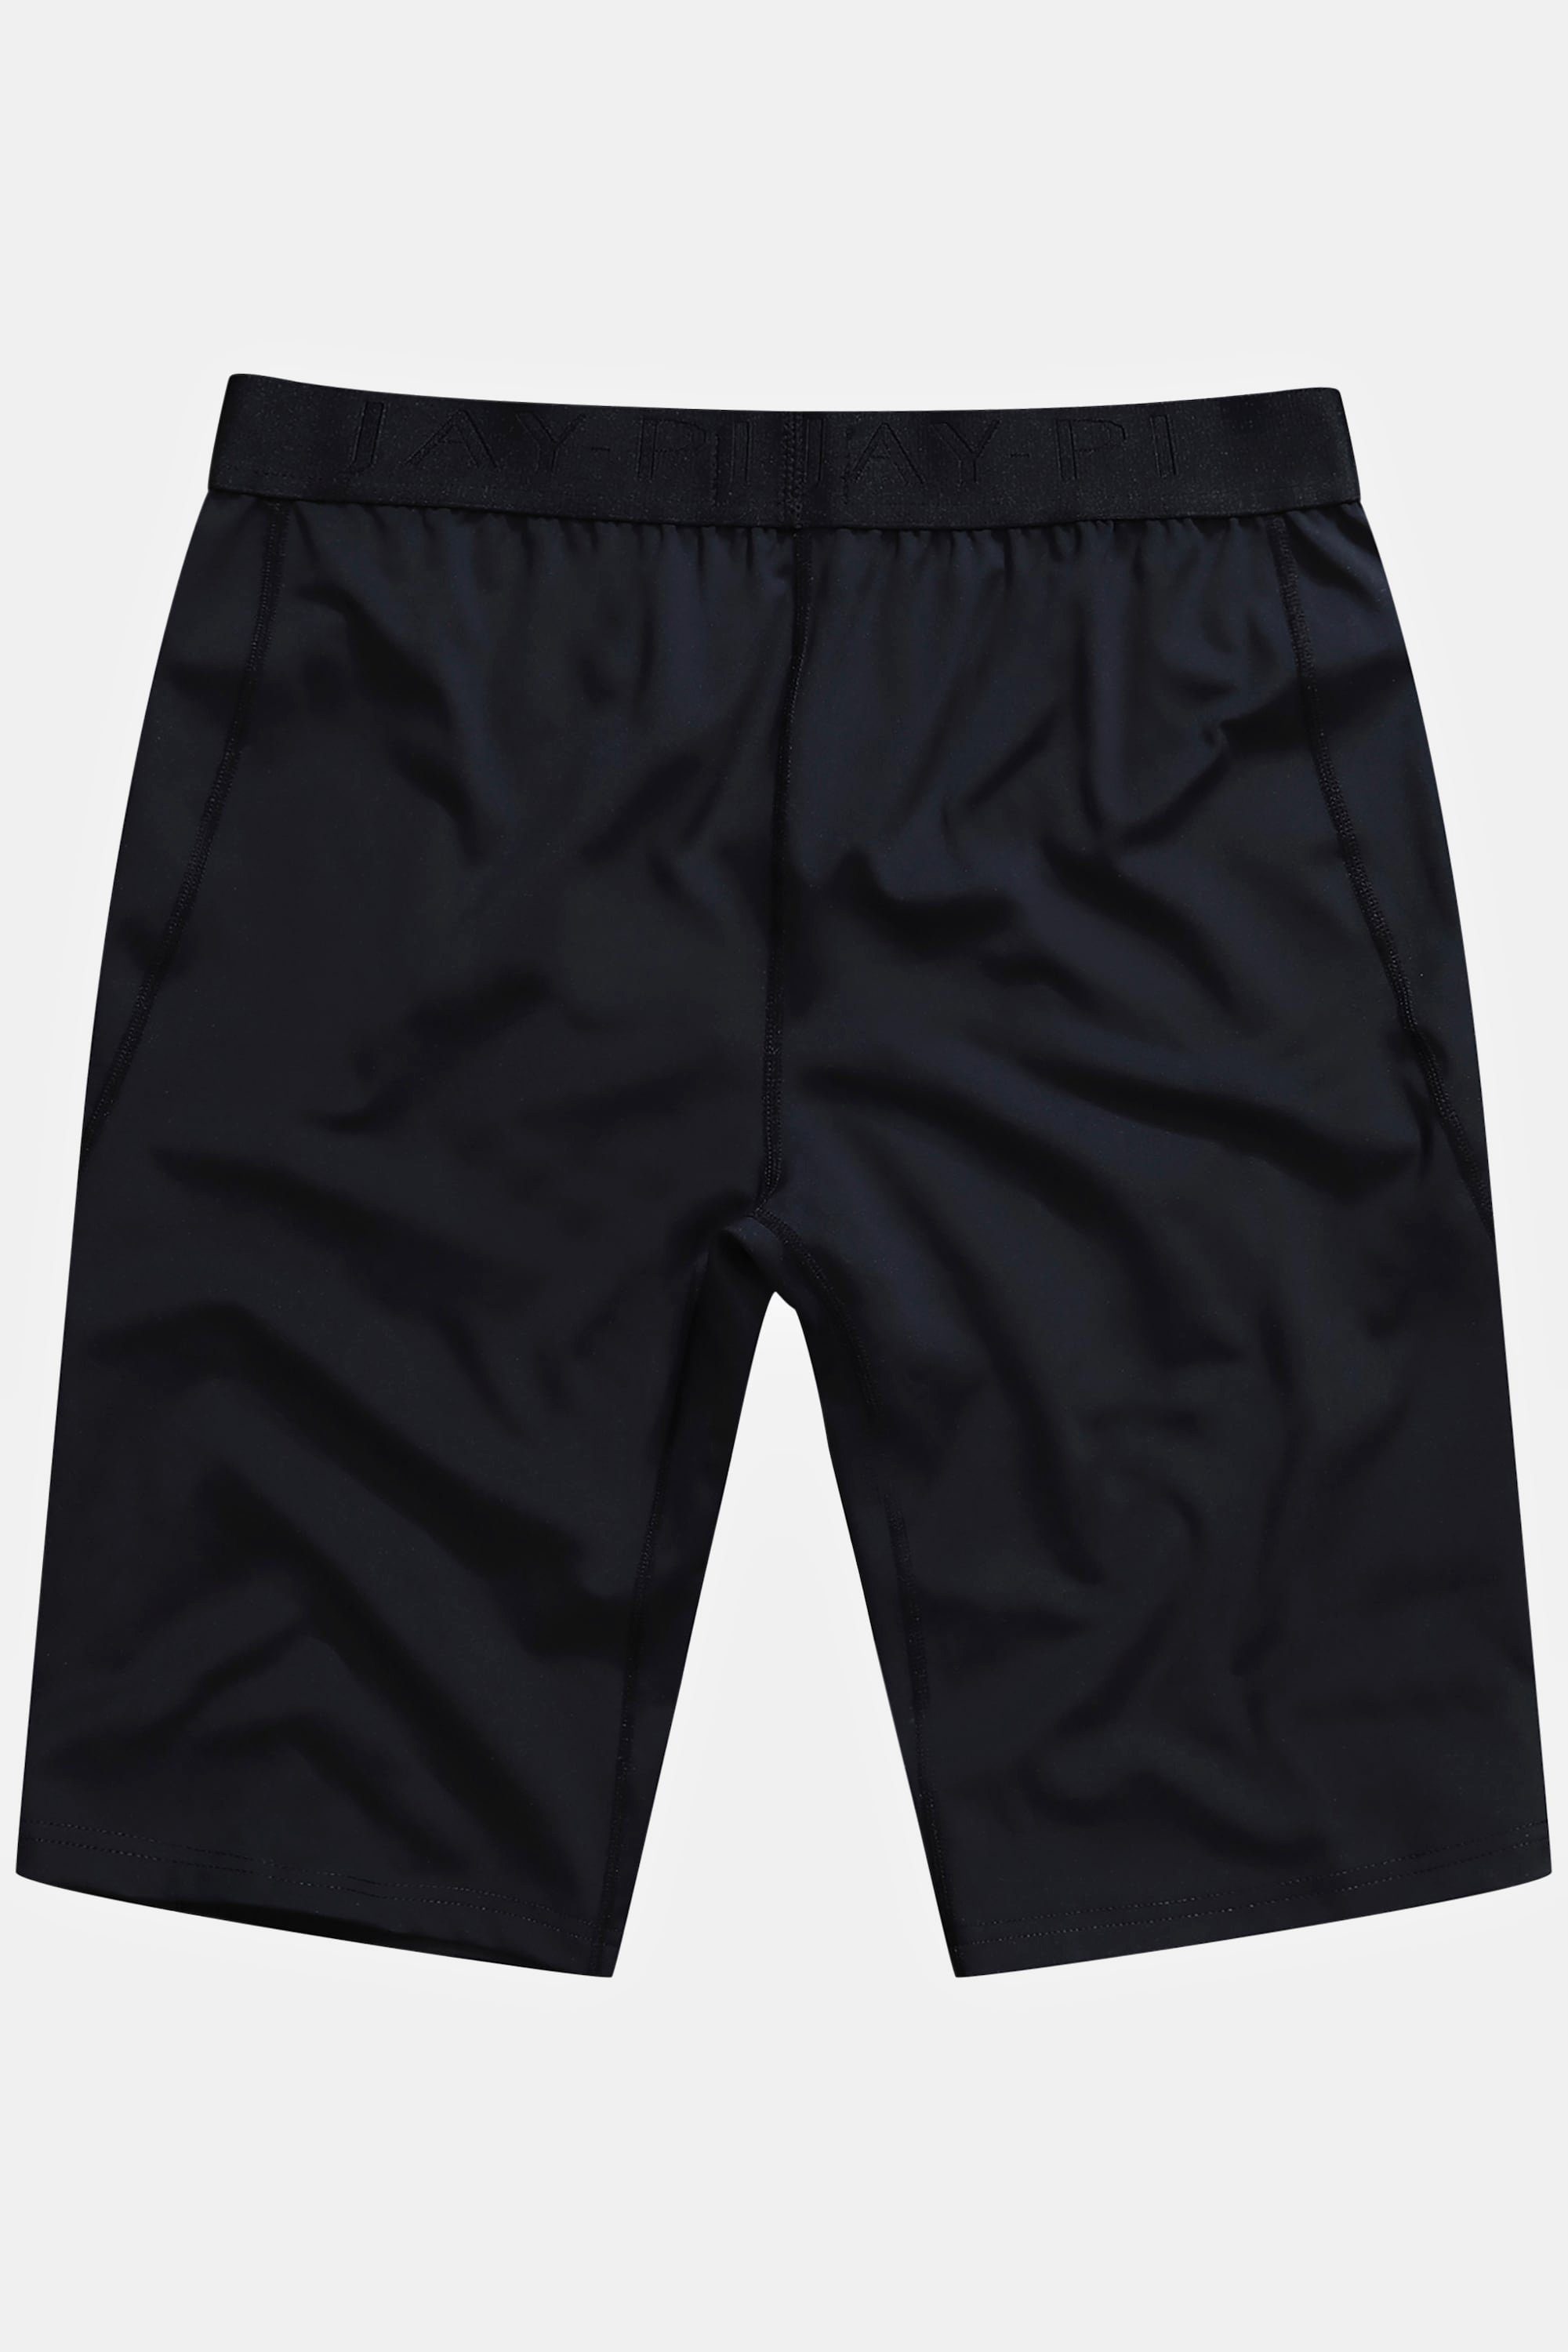 schwarz Unterhose Longpants Fitness JP1880 Boxershorts